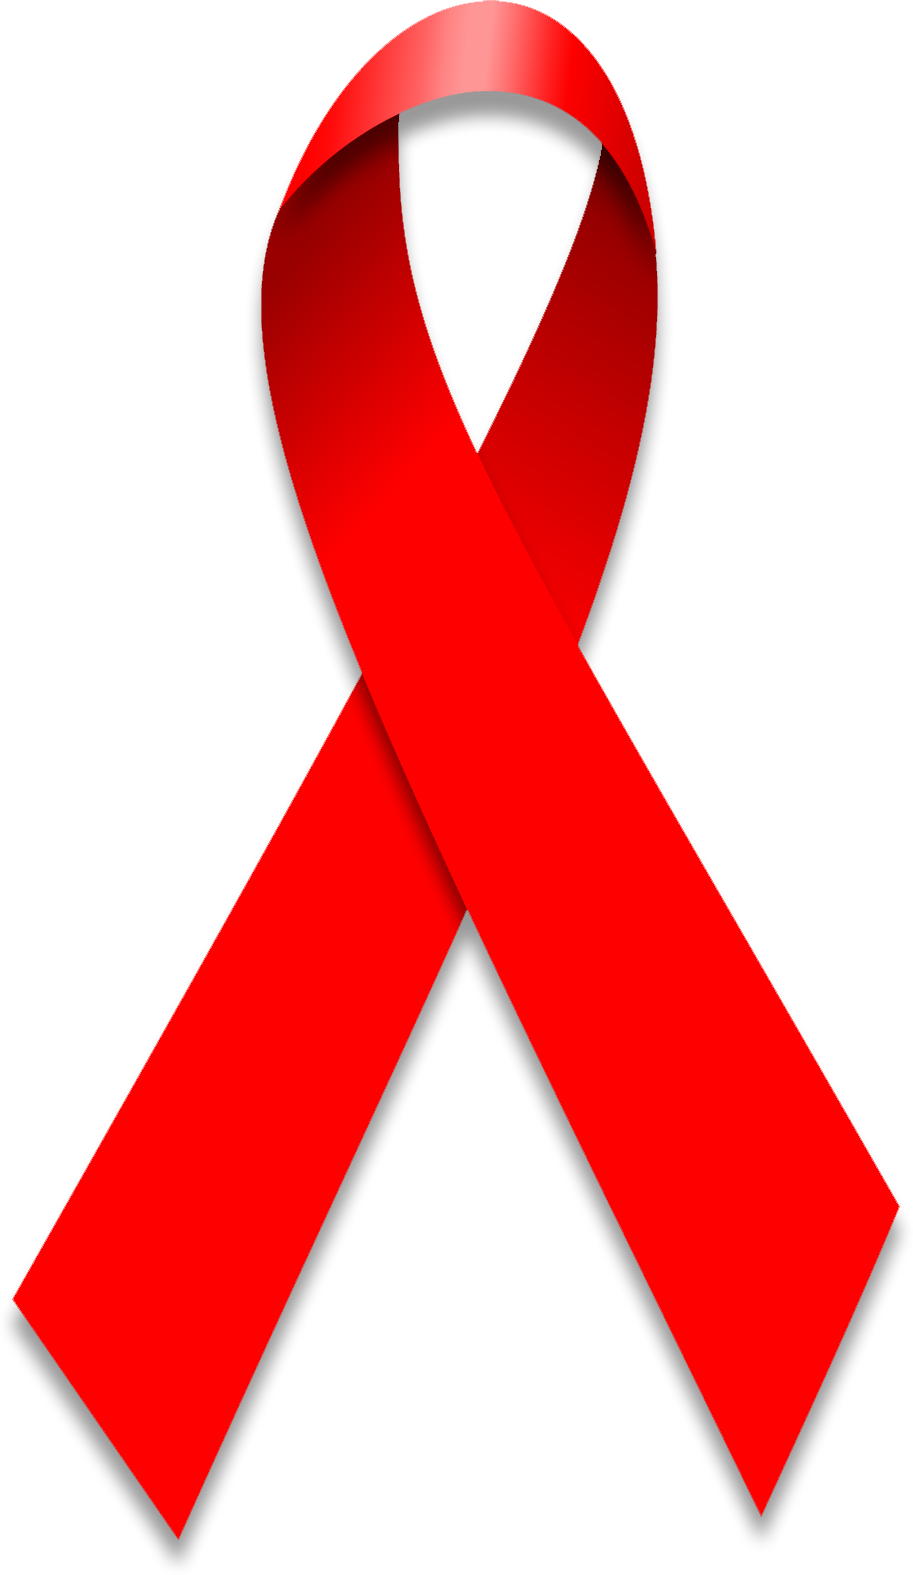 File:World Aids Day Ribbon.png.